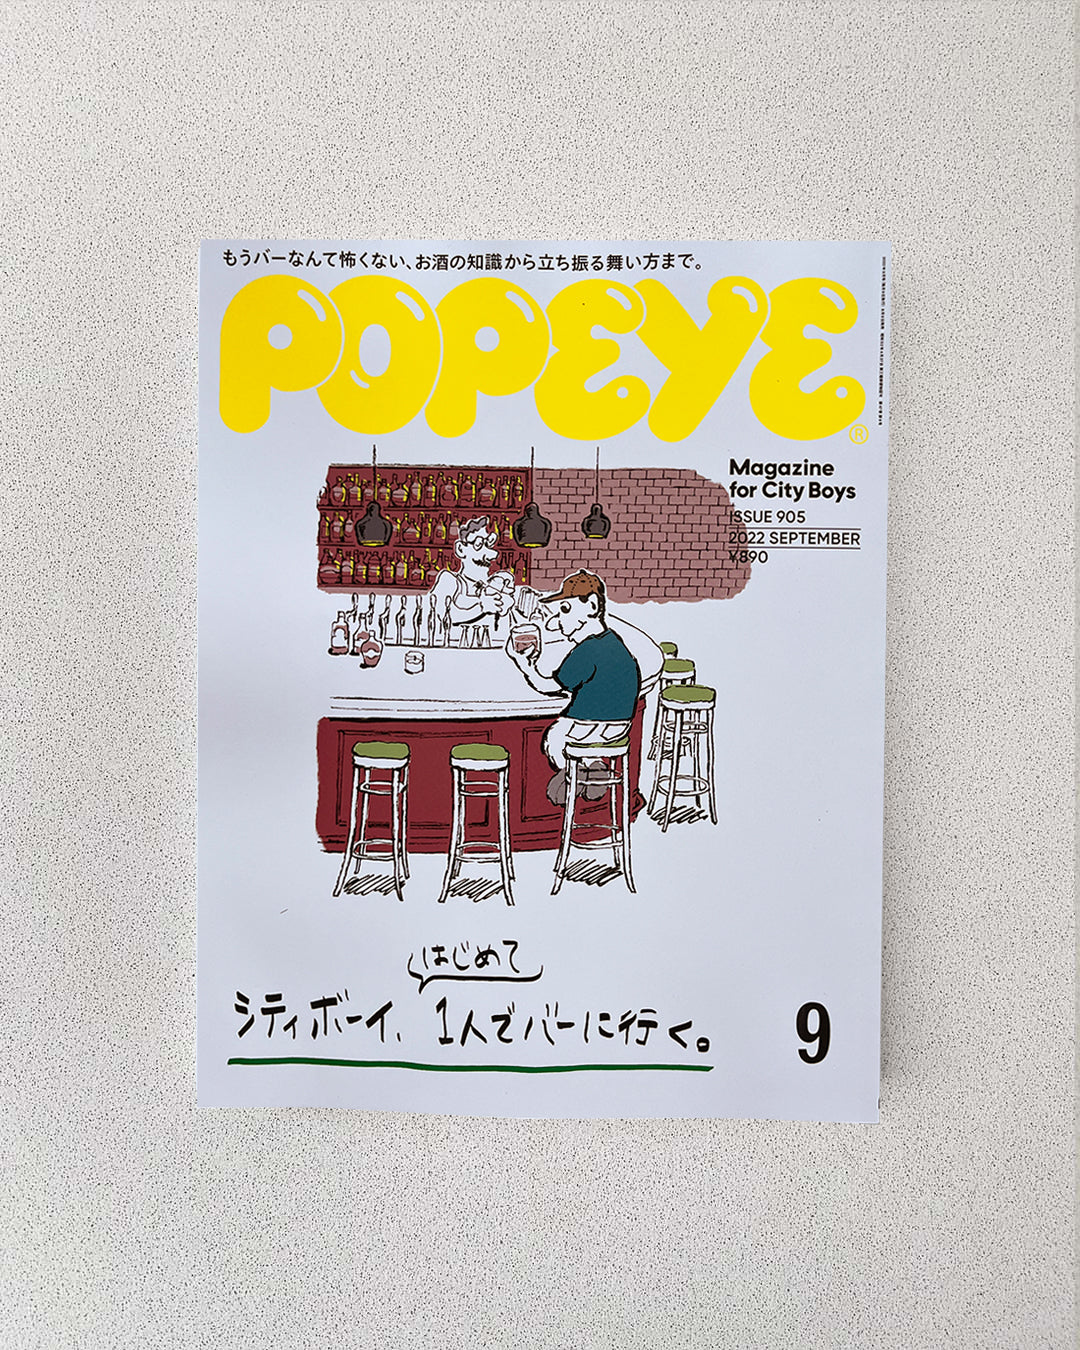 Popeye Issue 905